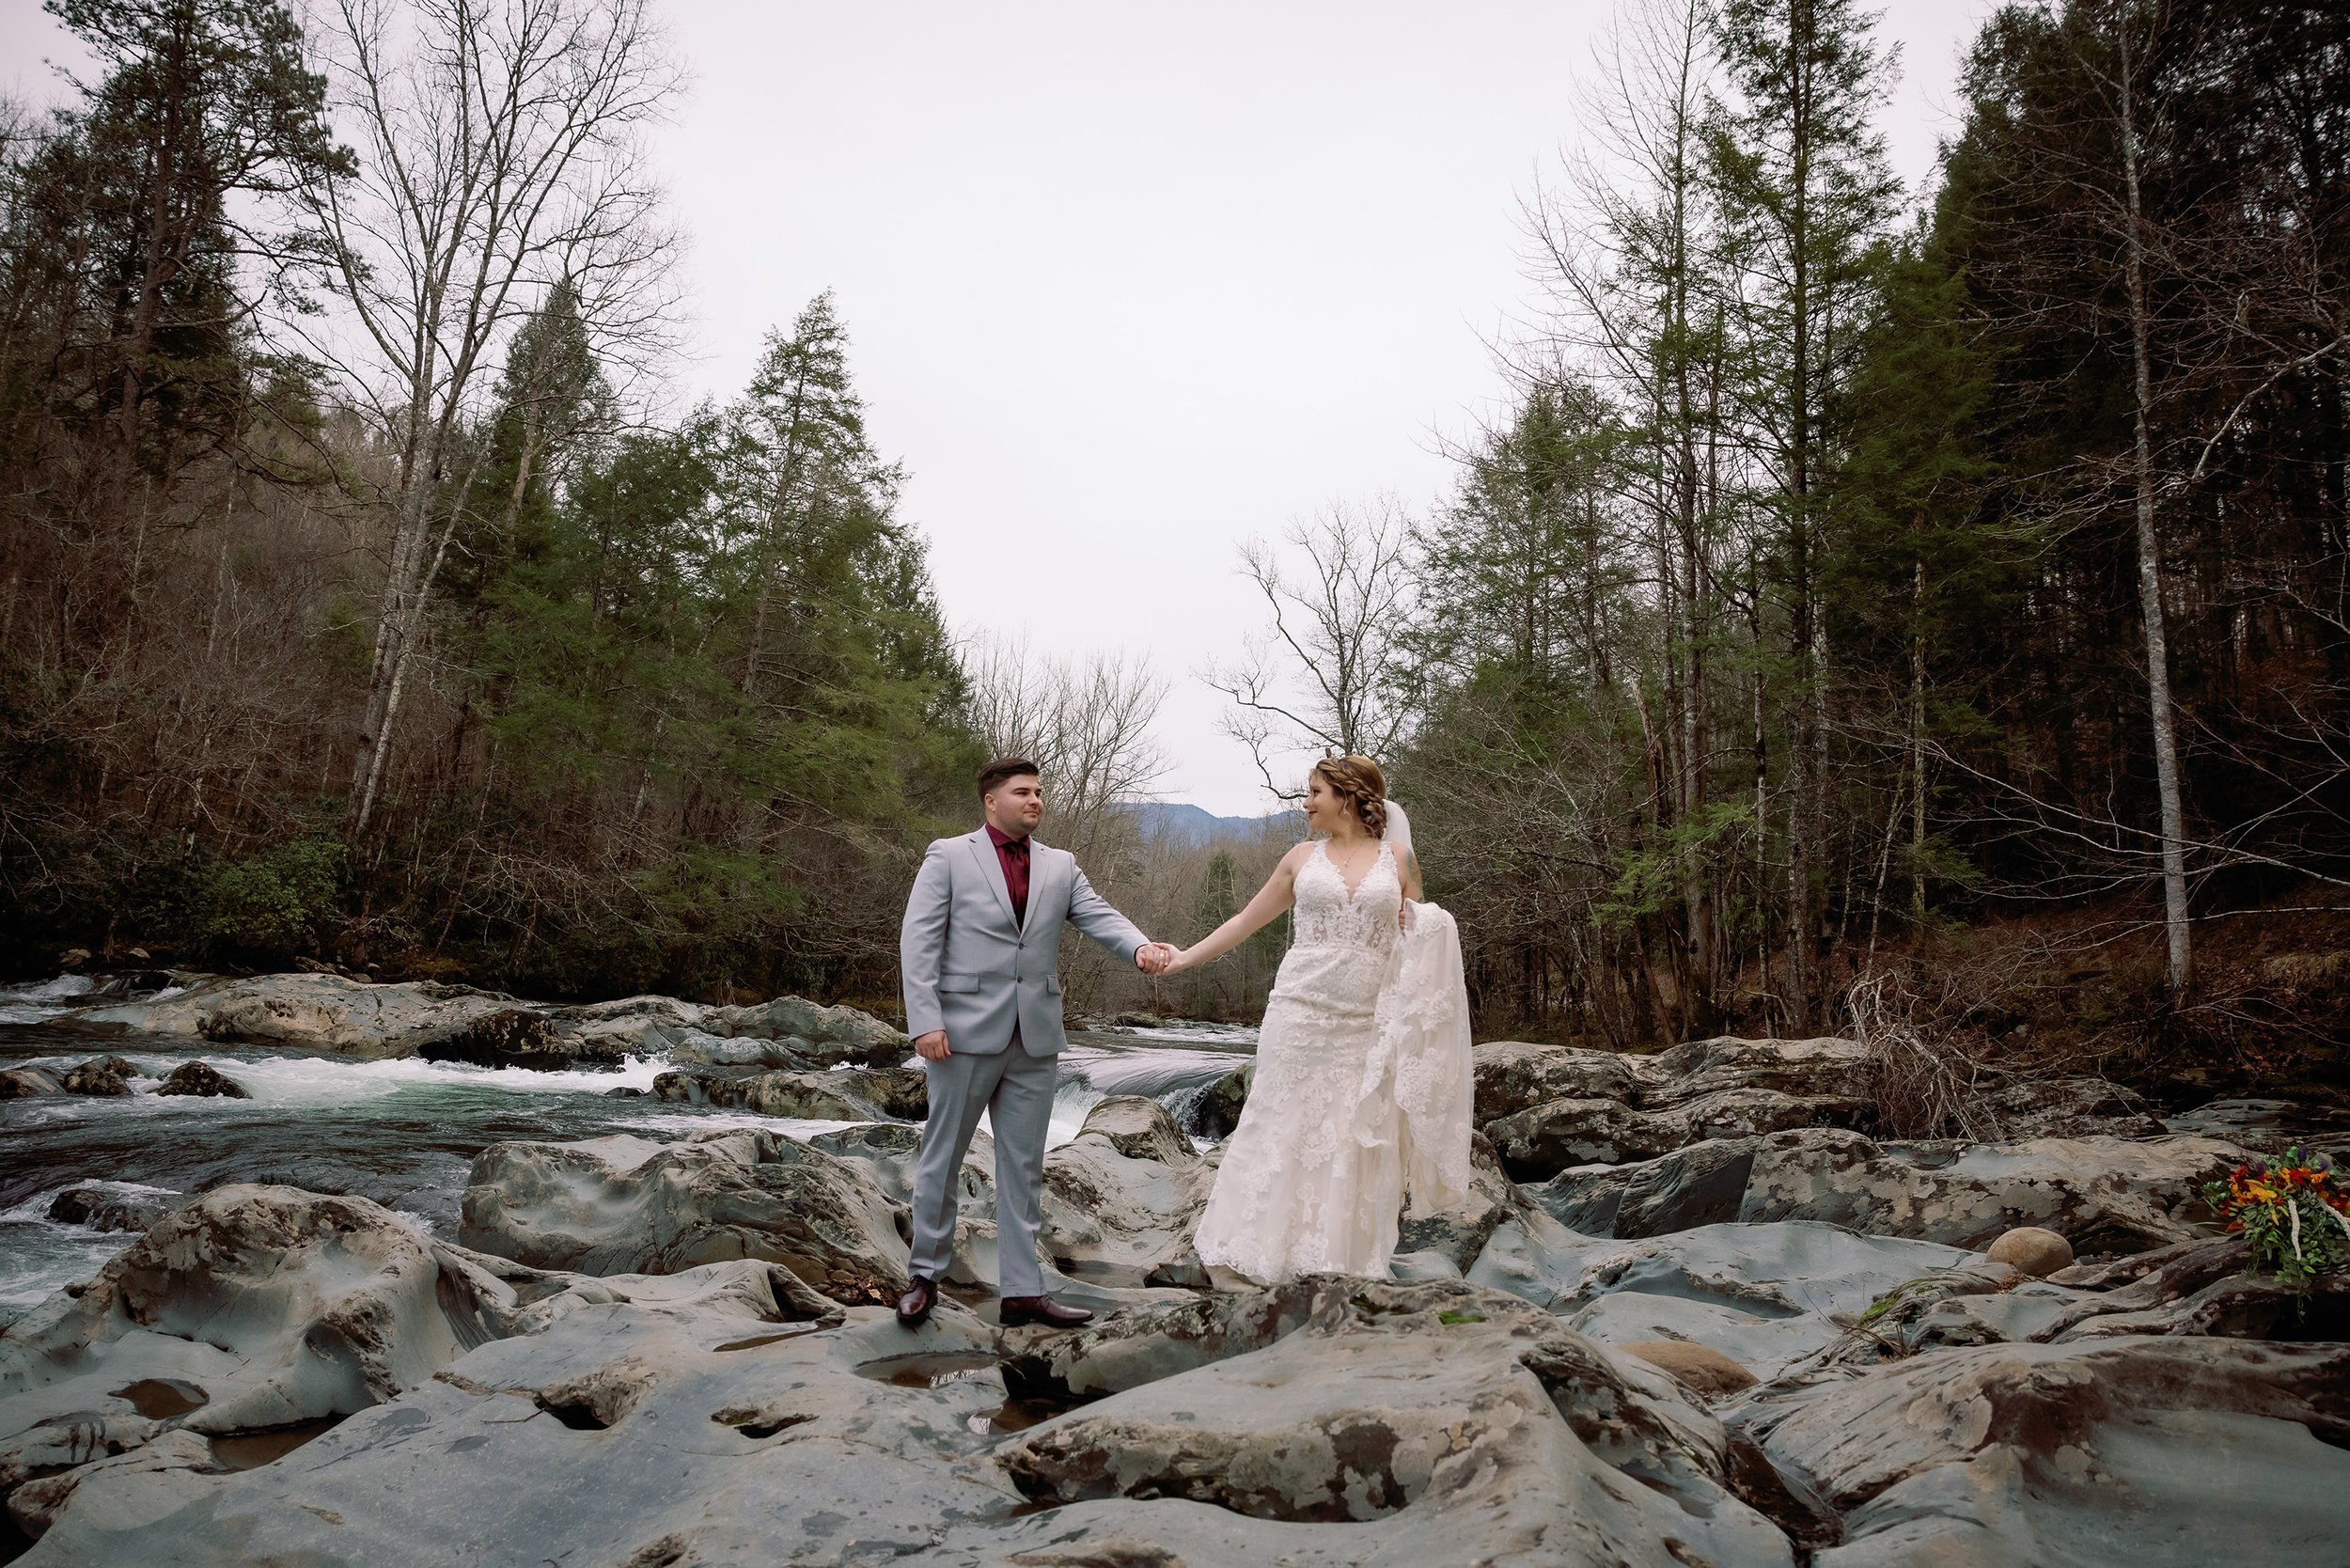 greenbrier-elopement-couple-walking-over-rocks.jpg